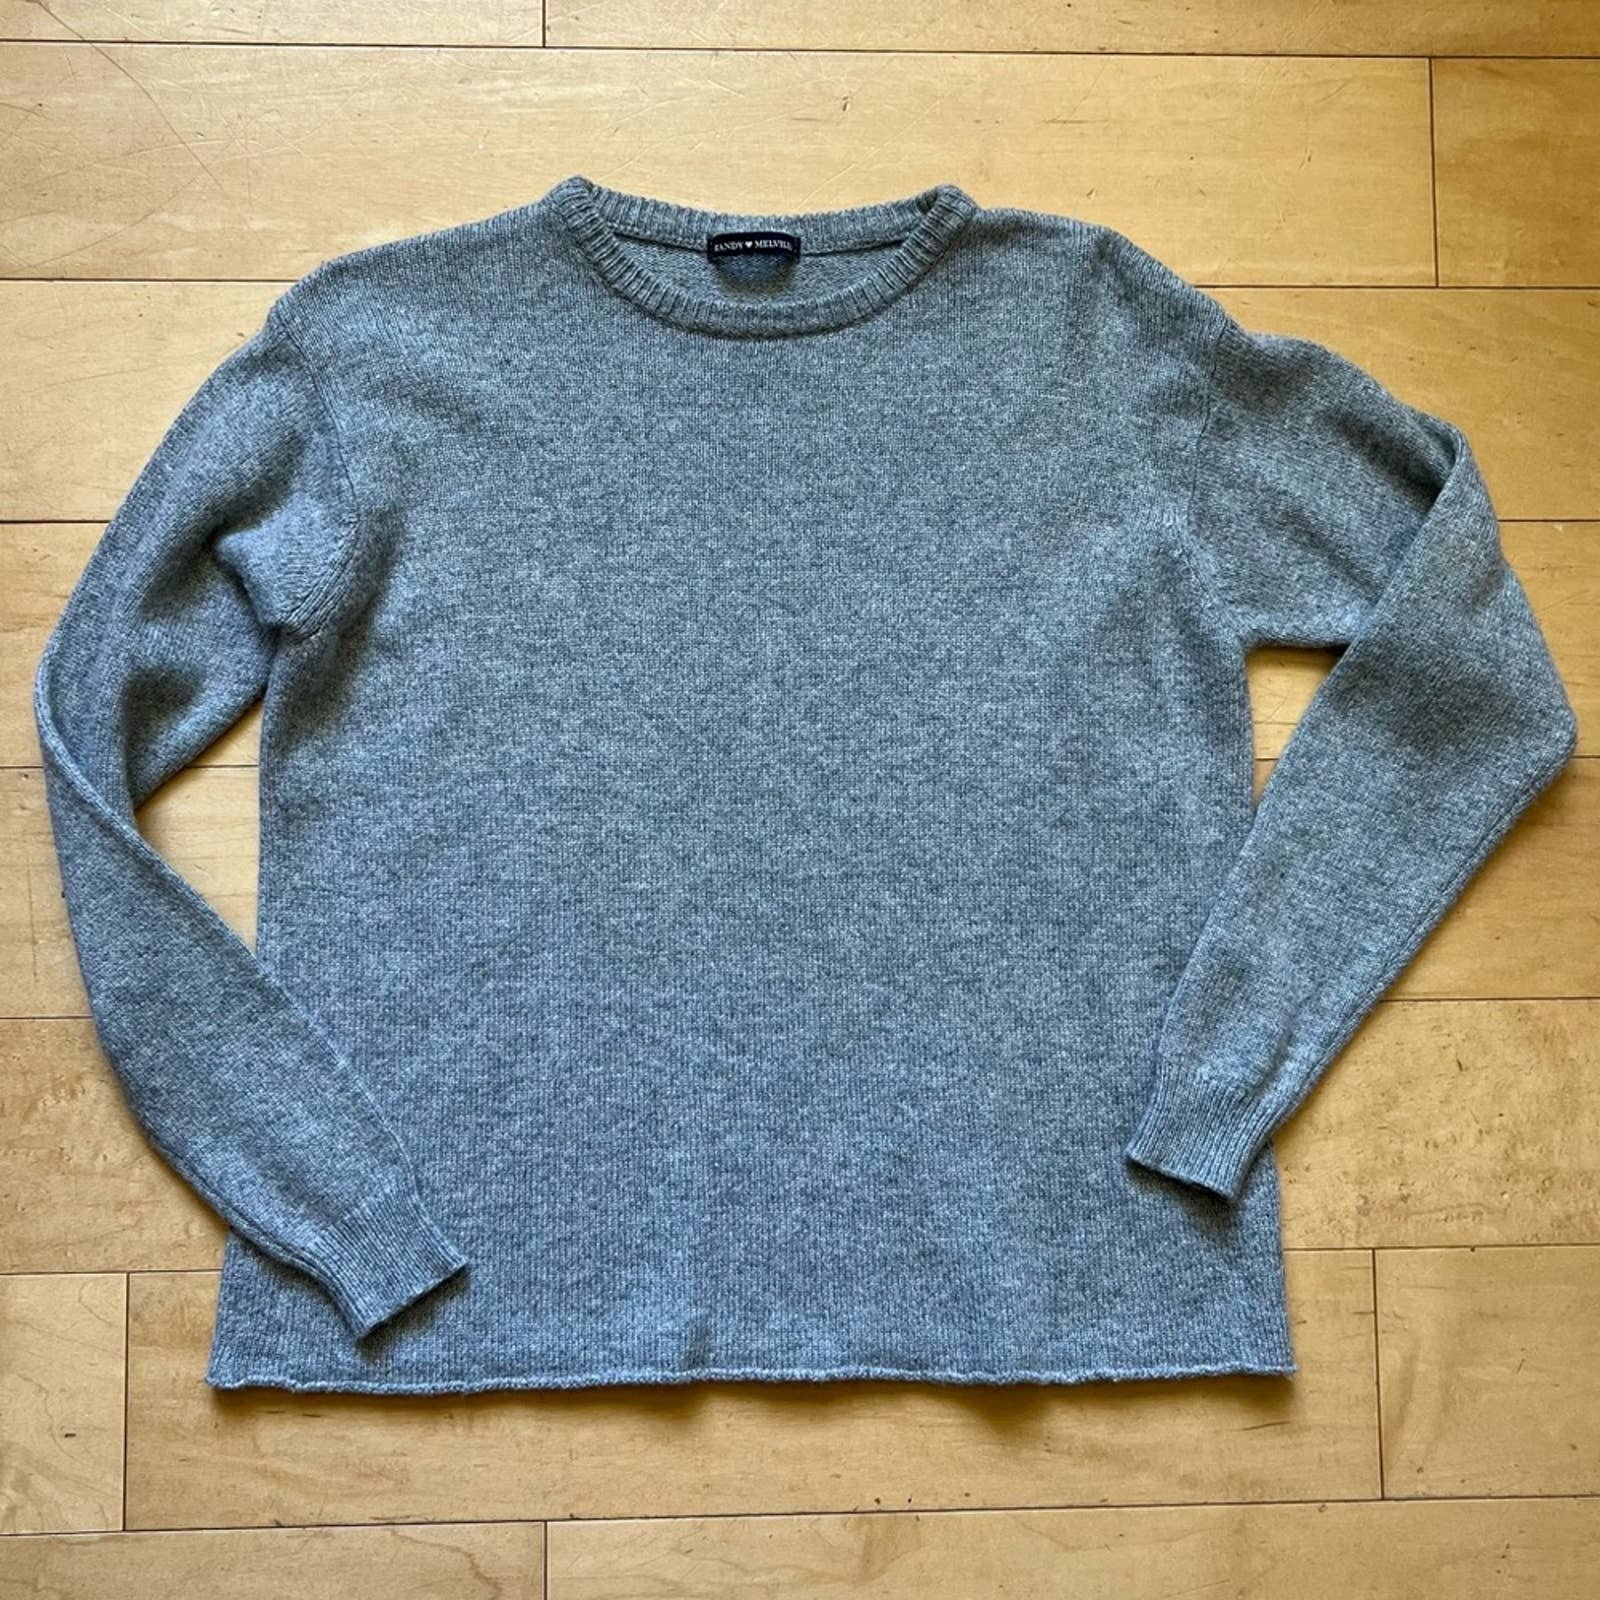 Brandy Melville Sweater Gray Small/Medium fU5zSzTlC